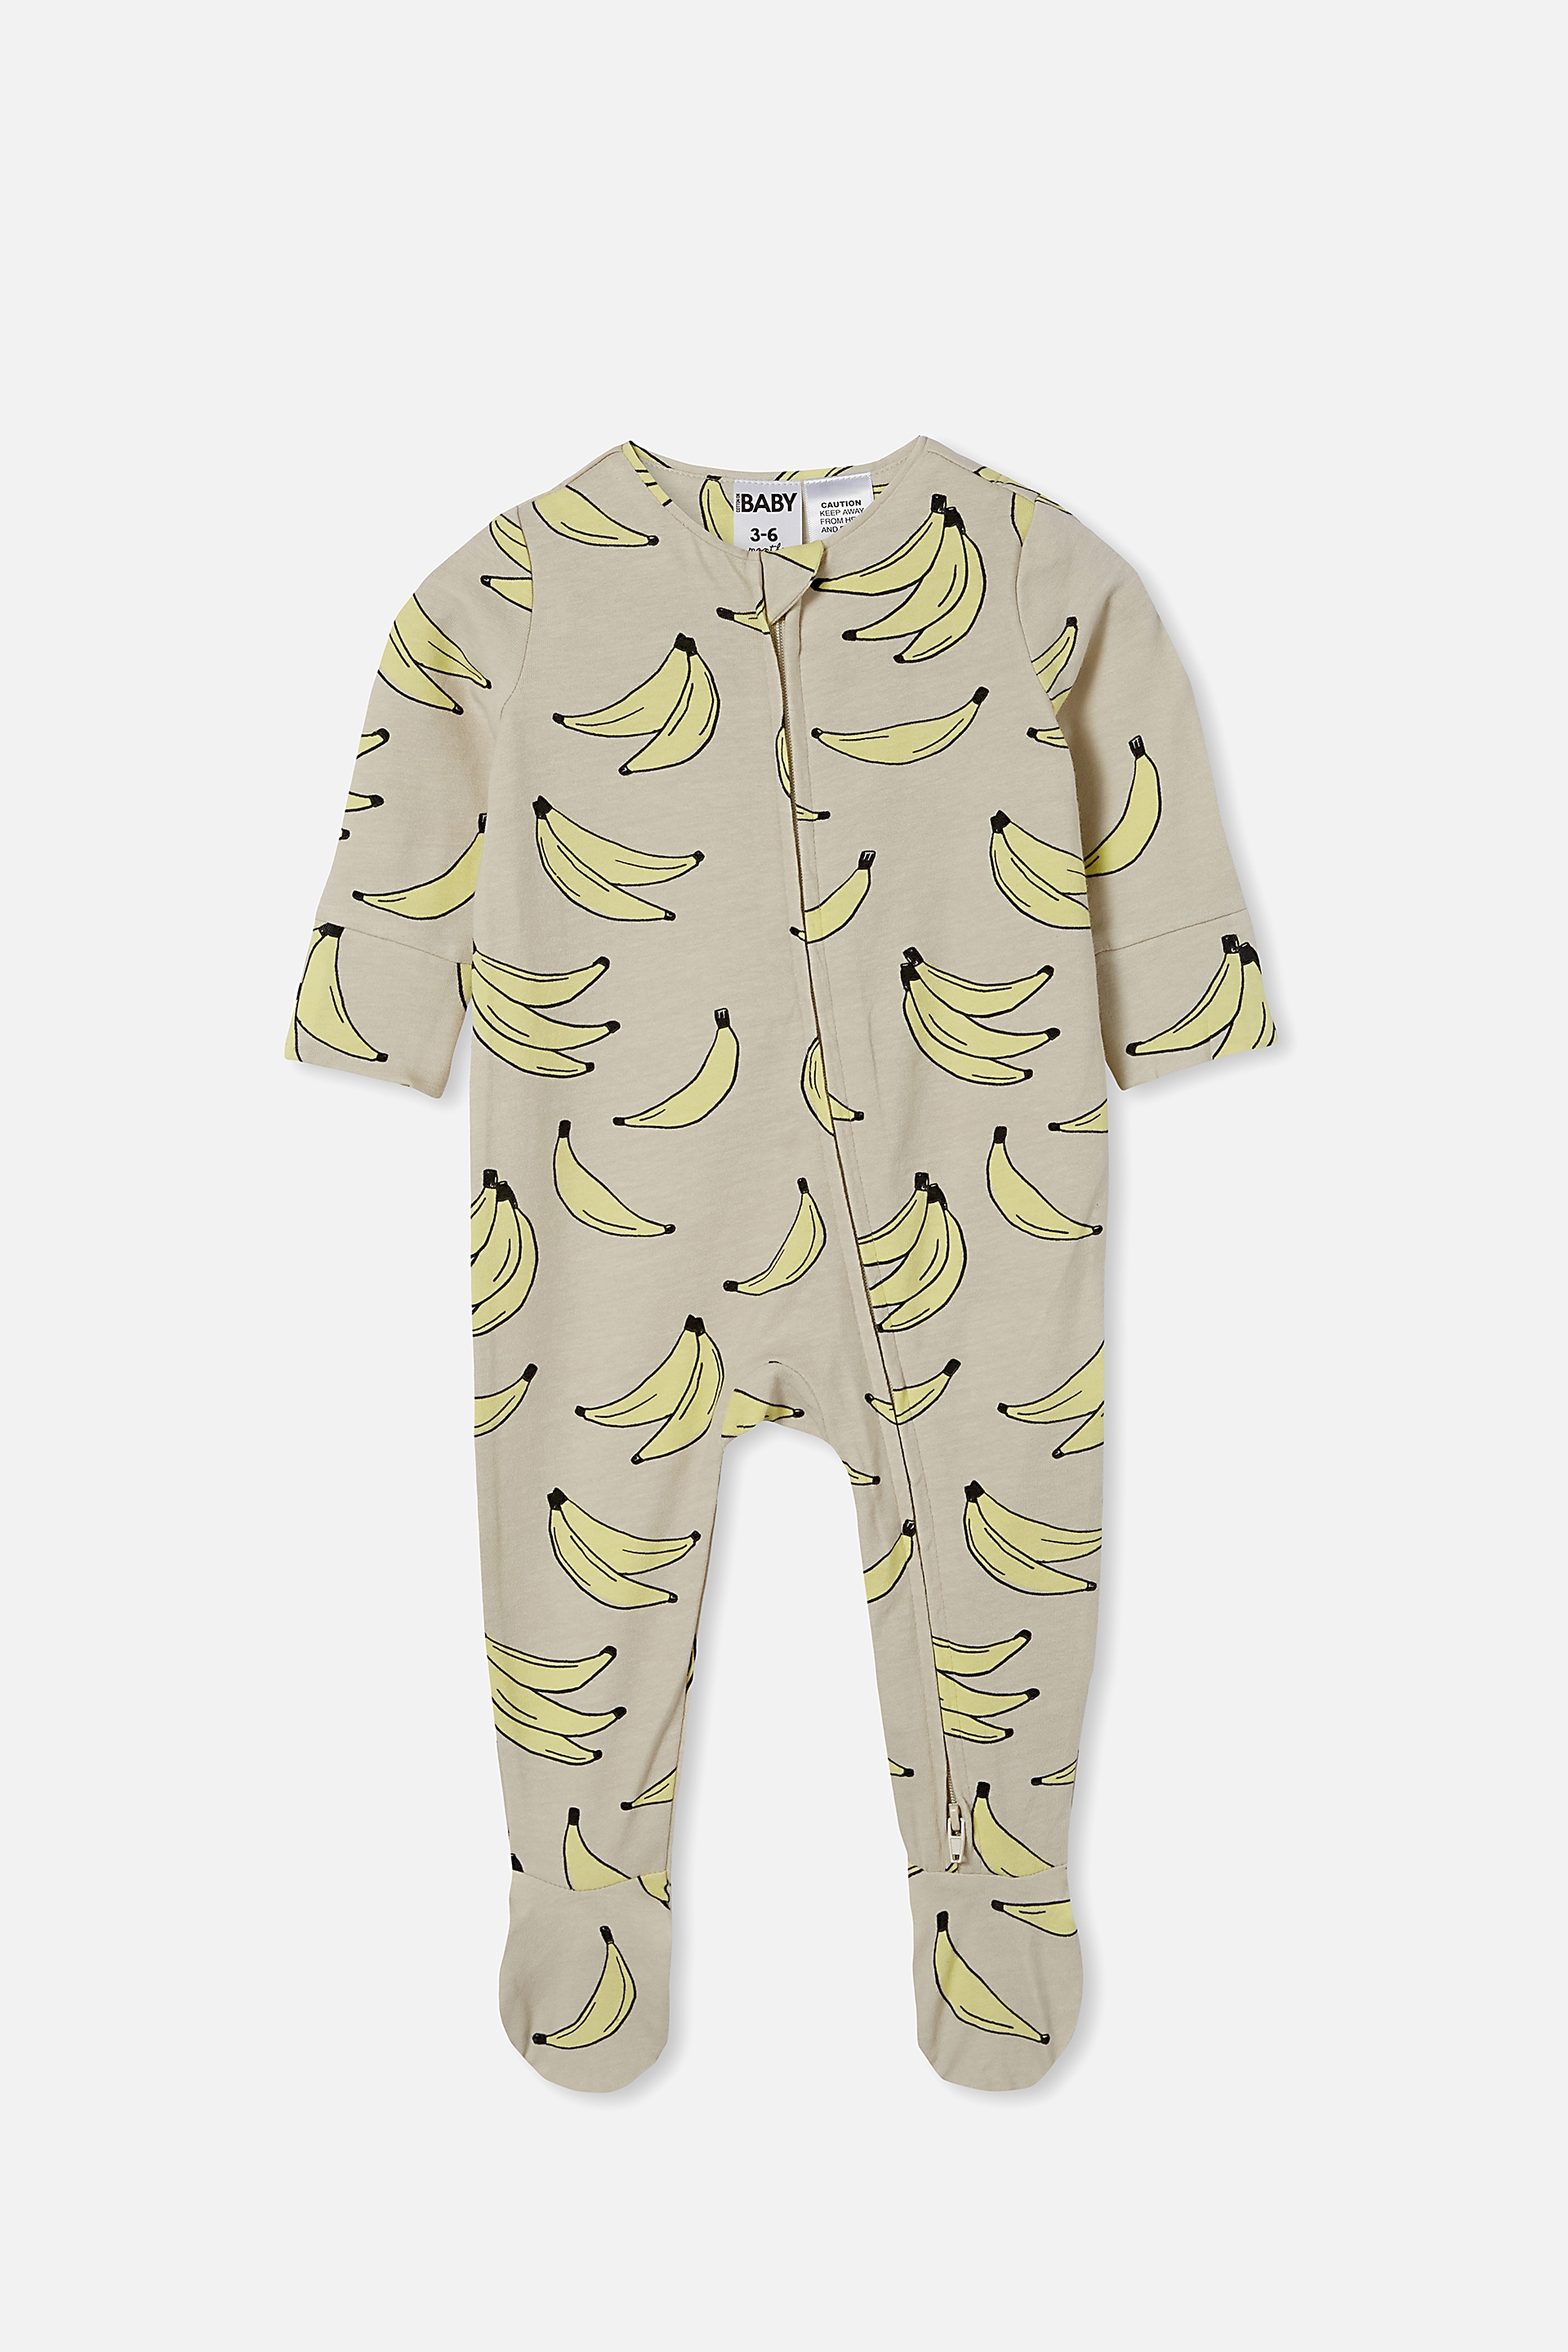 Cotton On Kids - The Long Sleeve Zip Romper - Rainy day/daisy yellow barry bananas